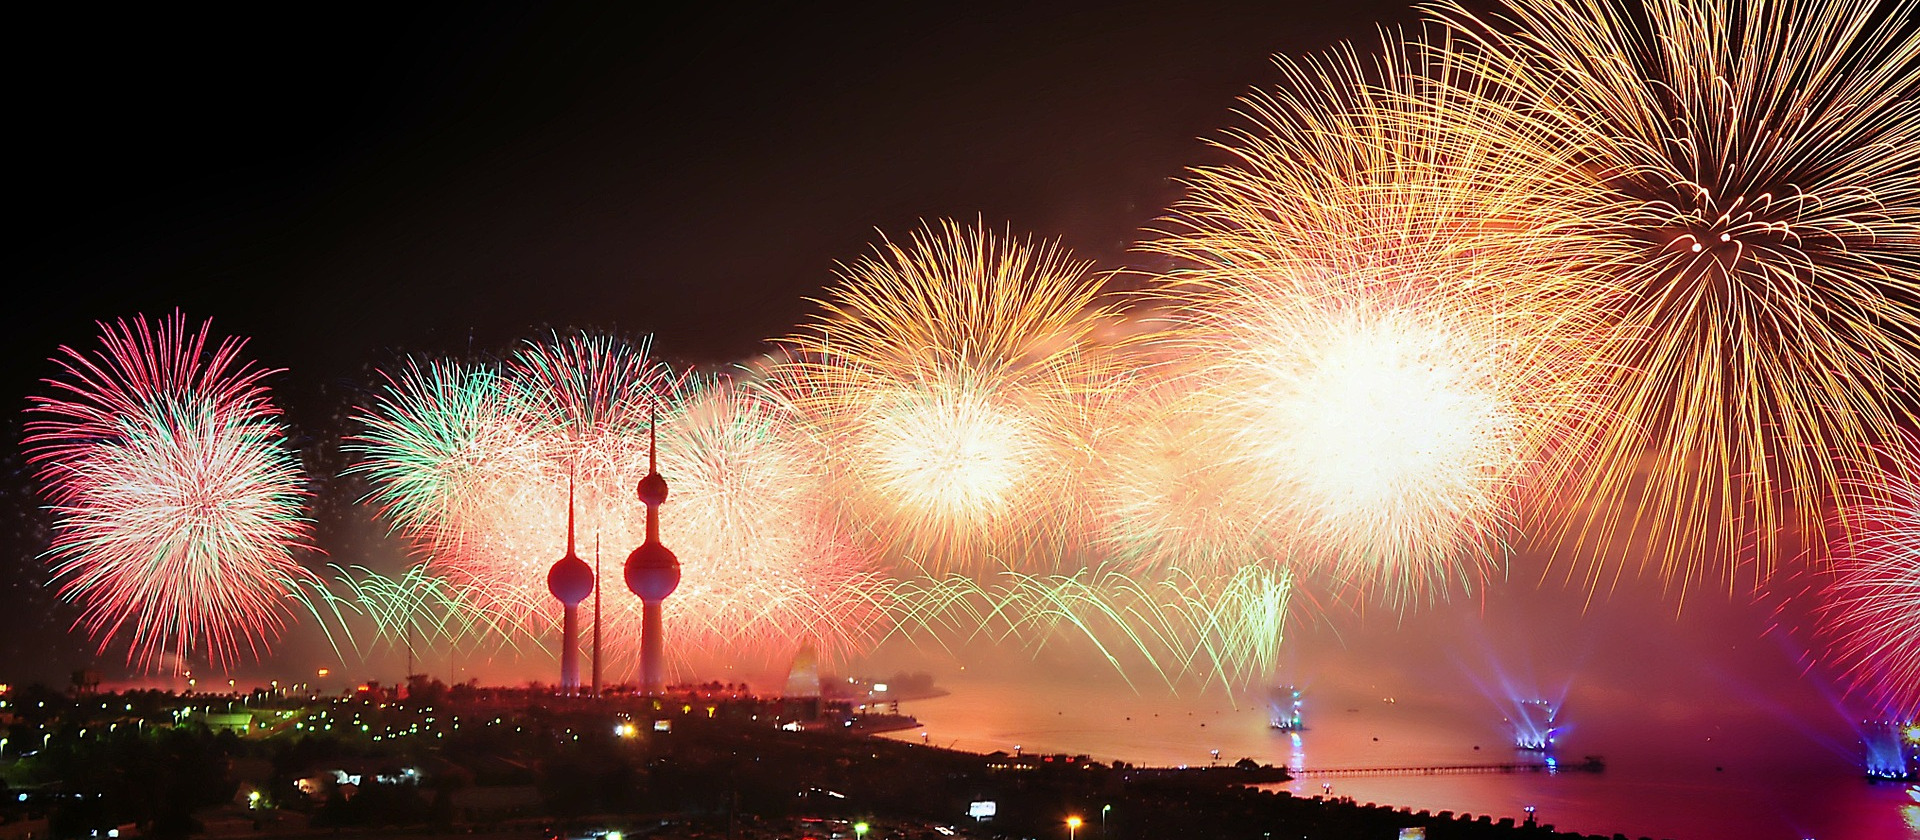 Fireworks display over Kuwait City